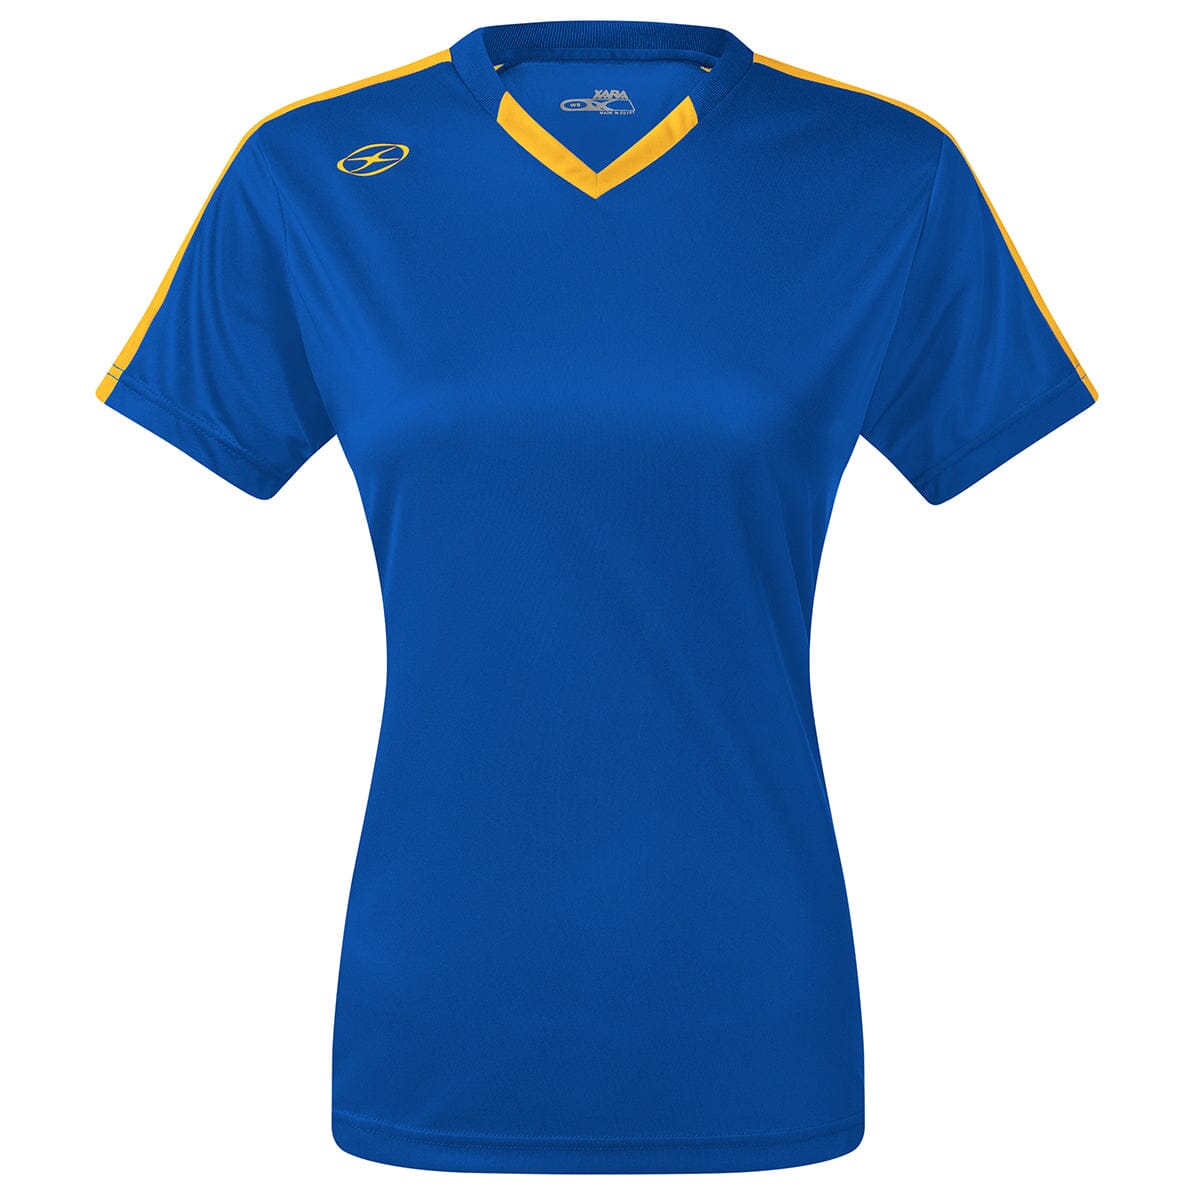 Britannia Jersey - Home Colors - Female Shirt Xara Soccer Royal/Gold Womens Small 